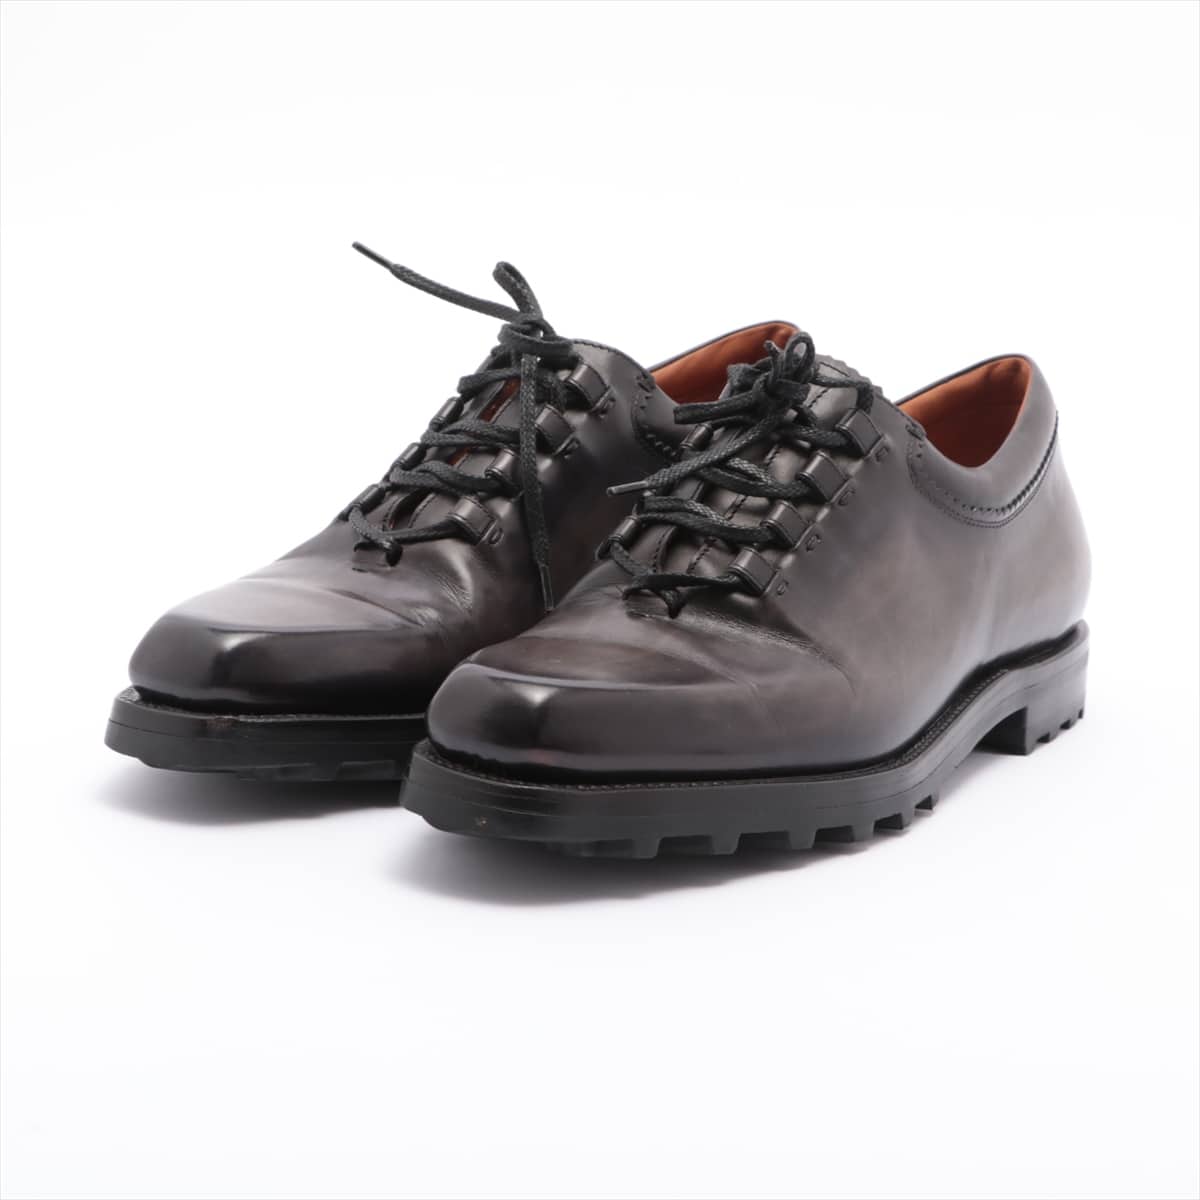 Berluti Leather Leather shoes 10 Men's Black